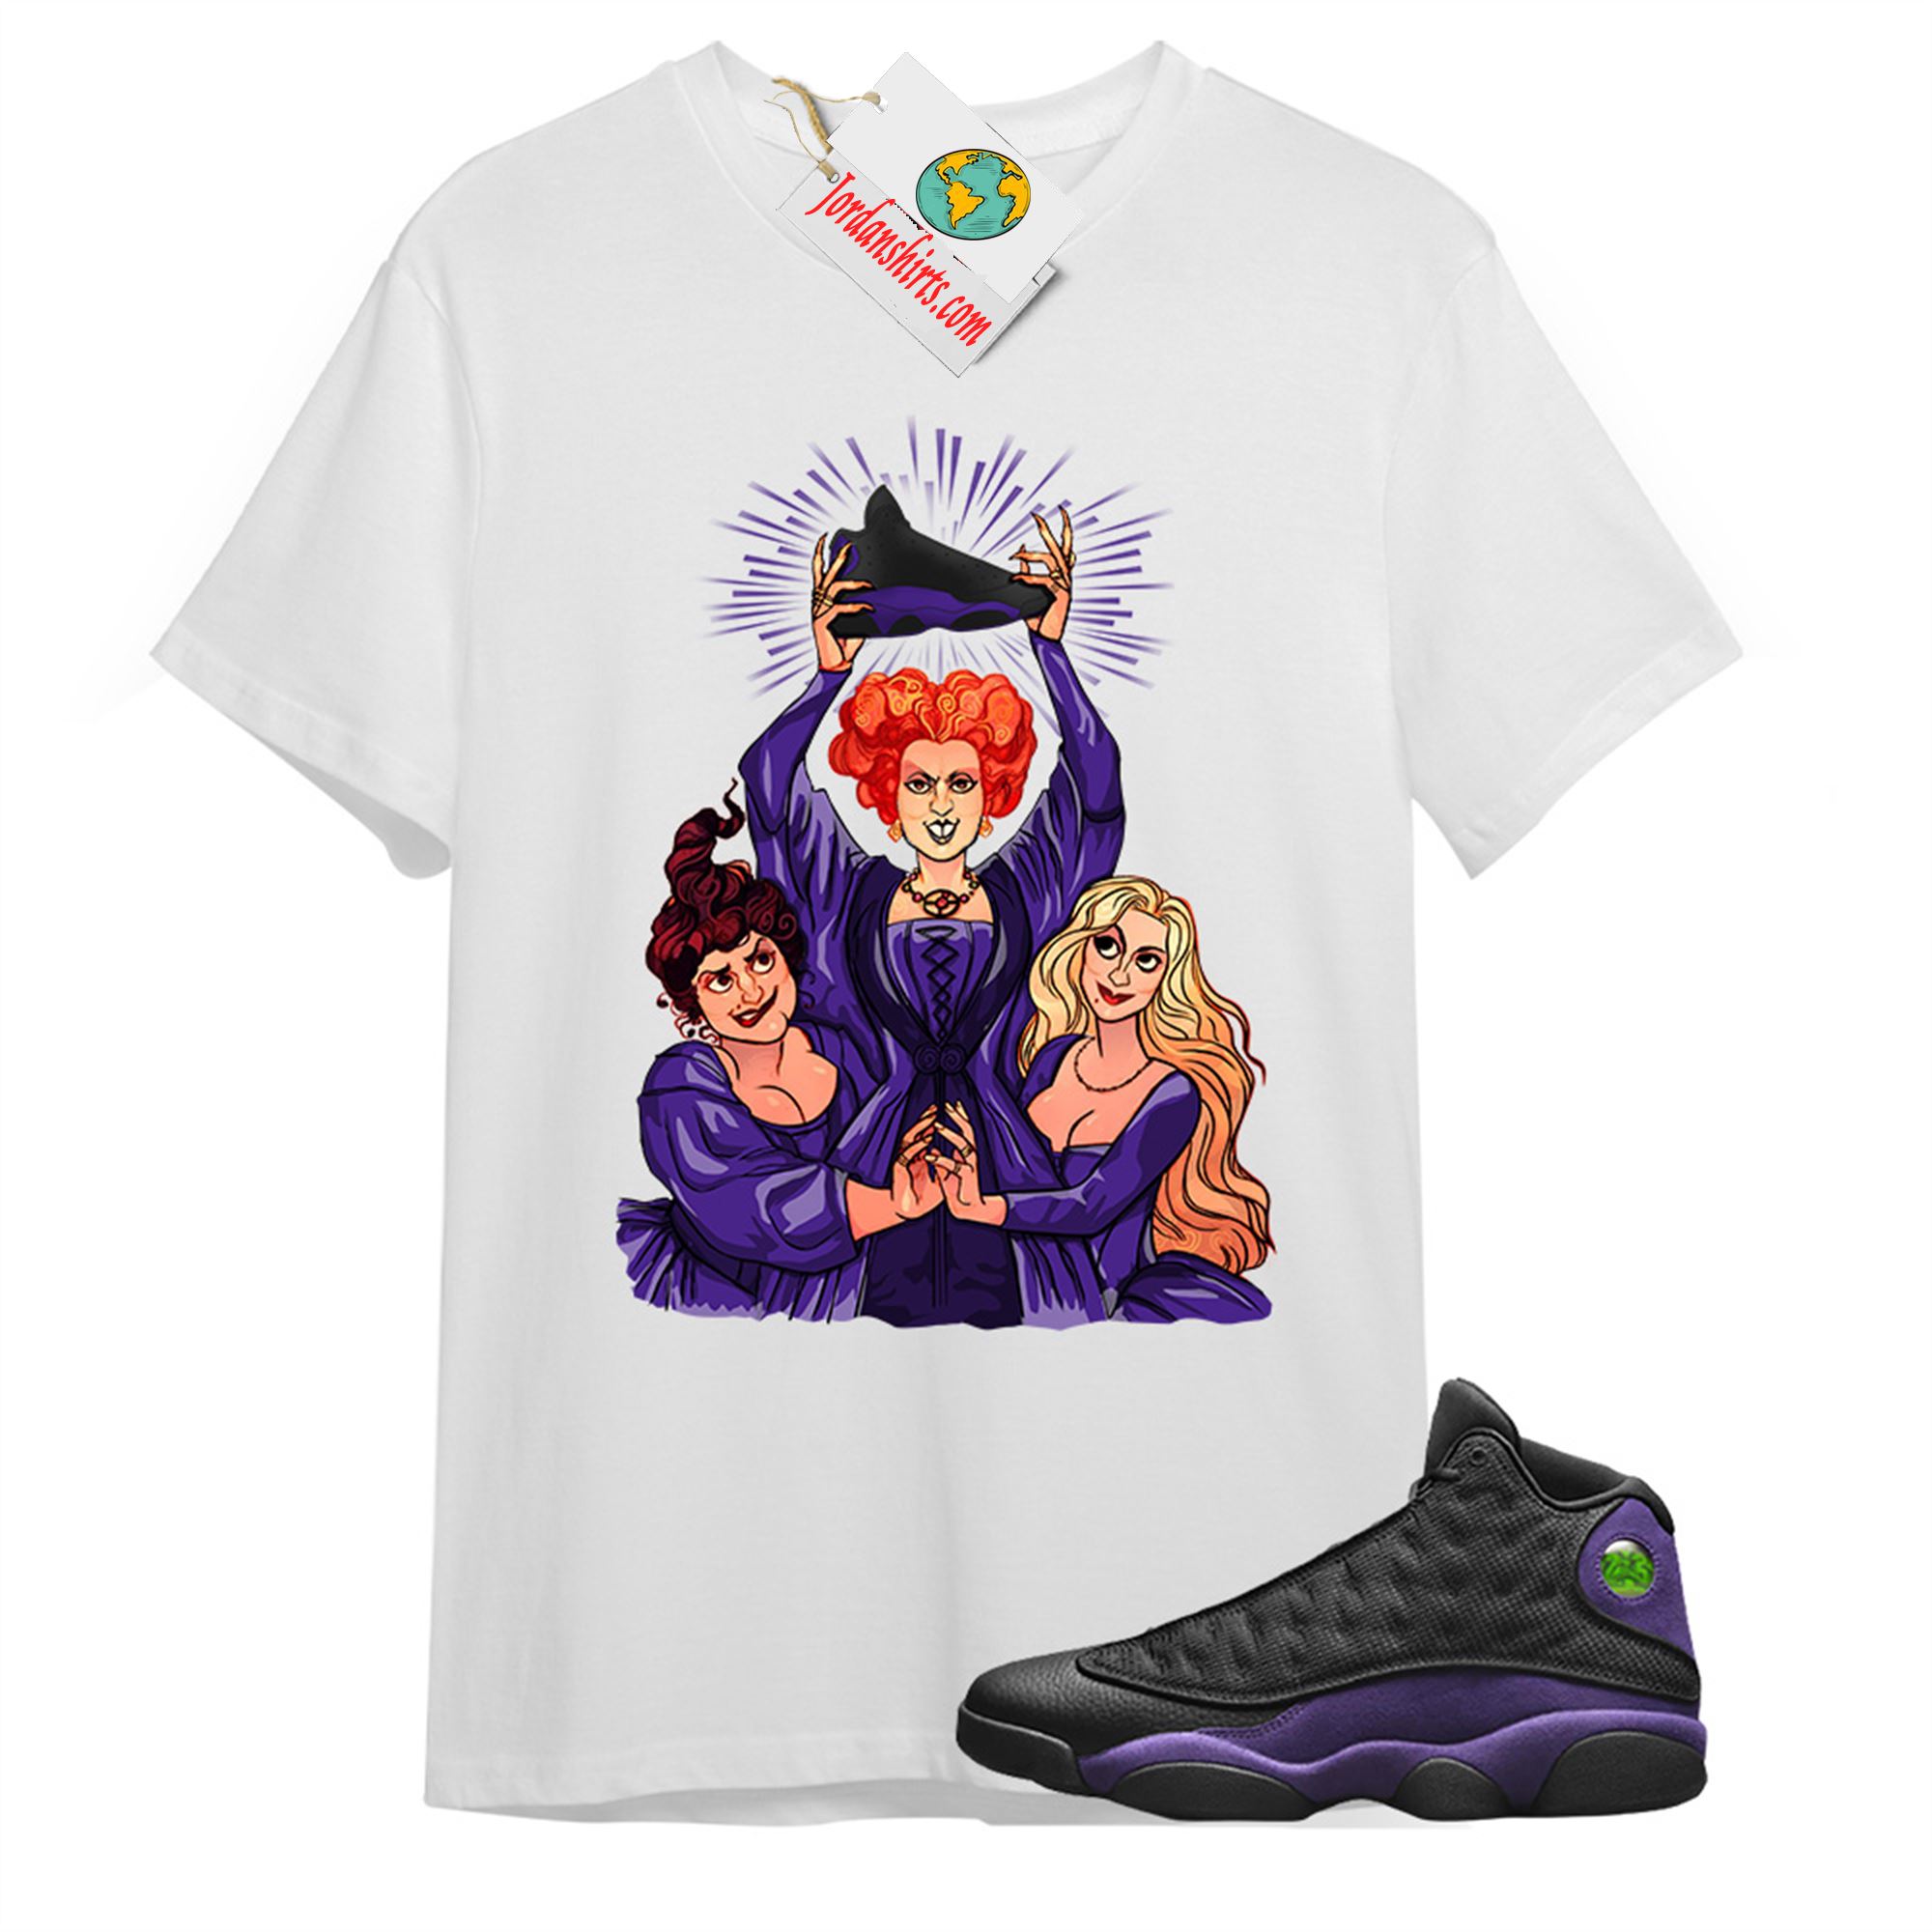 Jordan 13 Shirt, Hocus Pocus Three Witches White T-shirt Air Jordan 13 Court Purple 13s Plus Size Up To 5xl